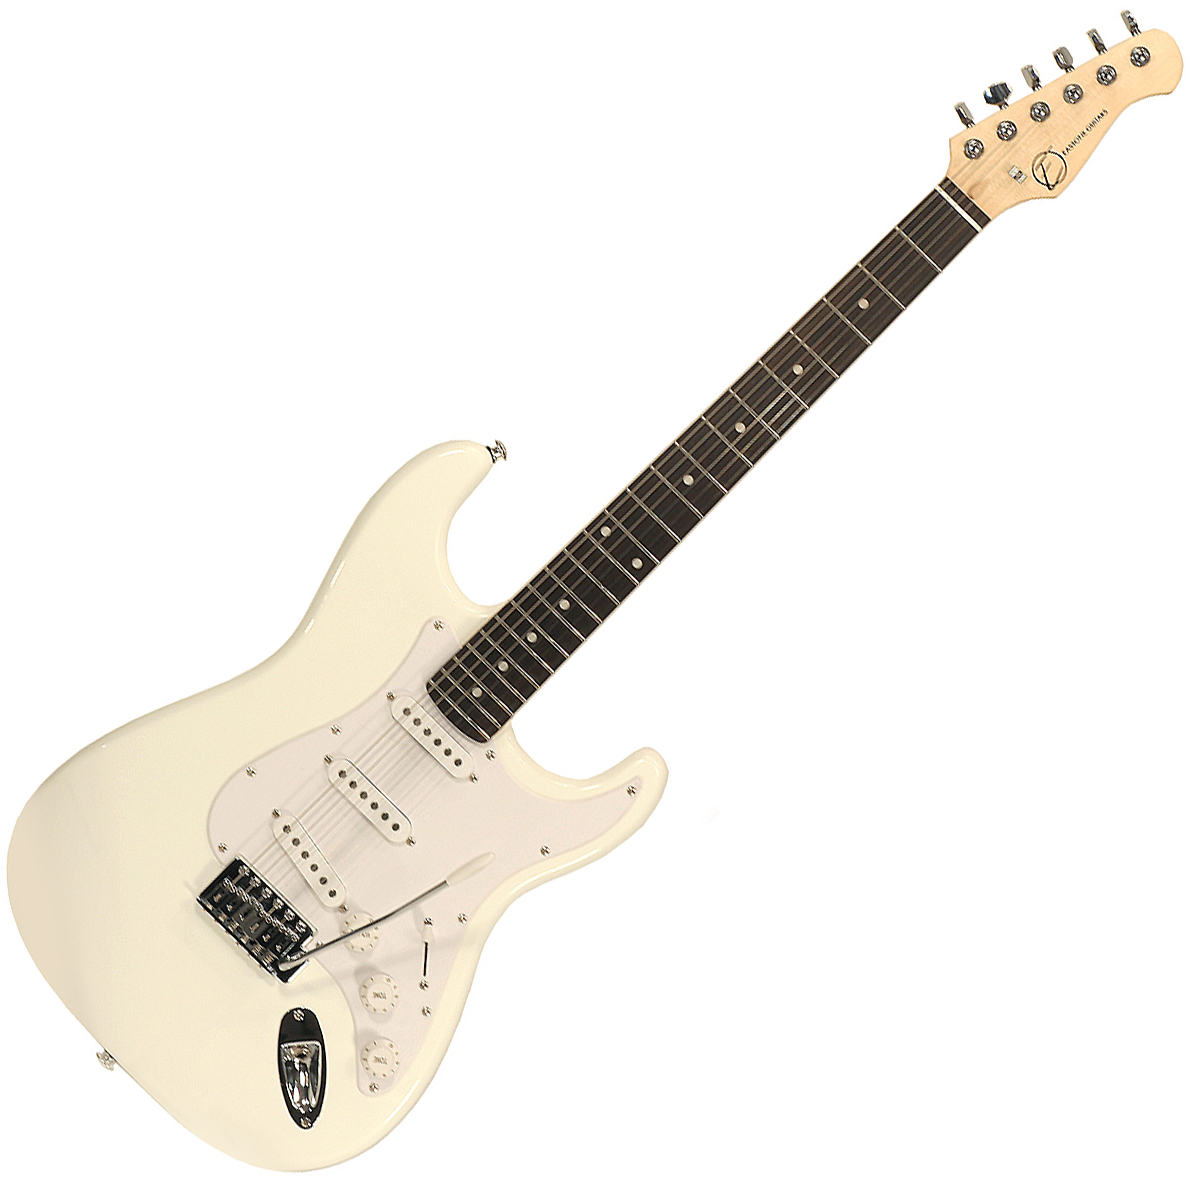 Eastone Str70-wht 3s Pur - Ivory - Str shape electric guitar - Variation 6